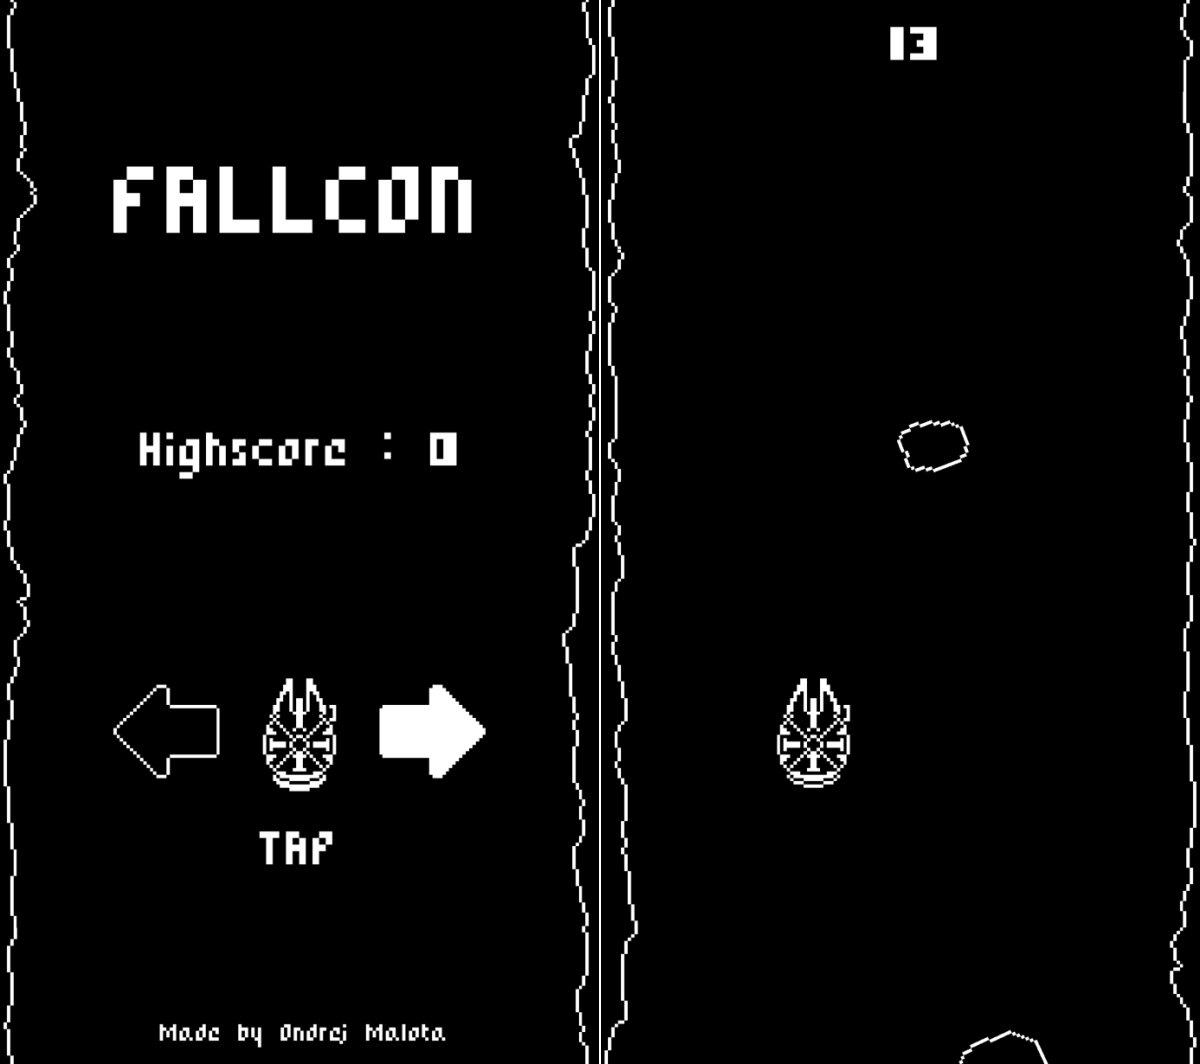 Fallcone capture ipa iphone game